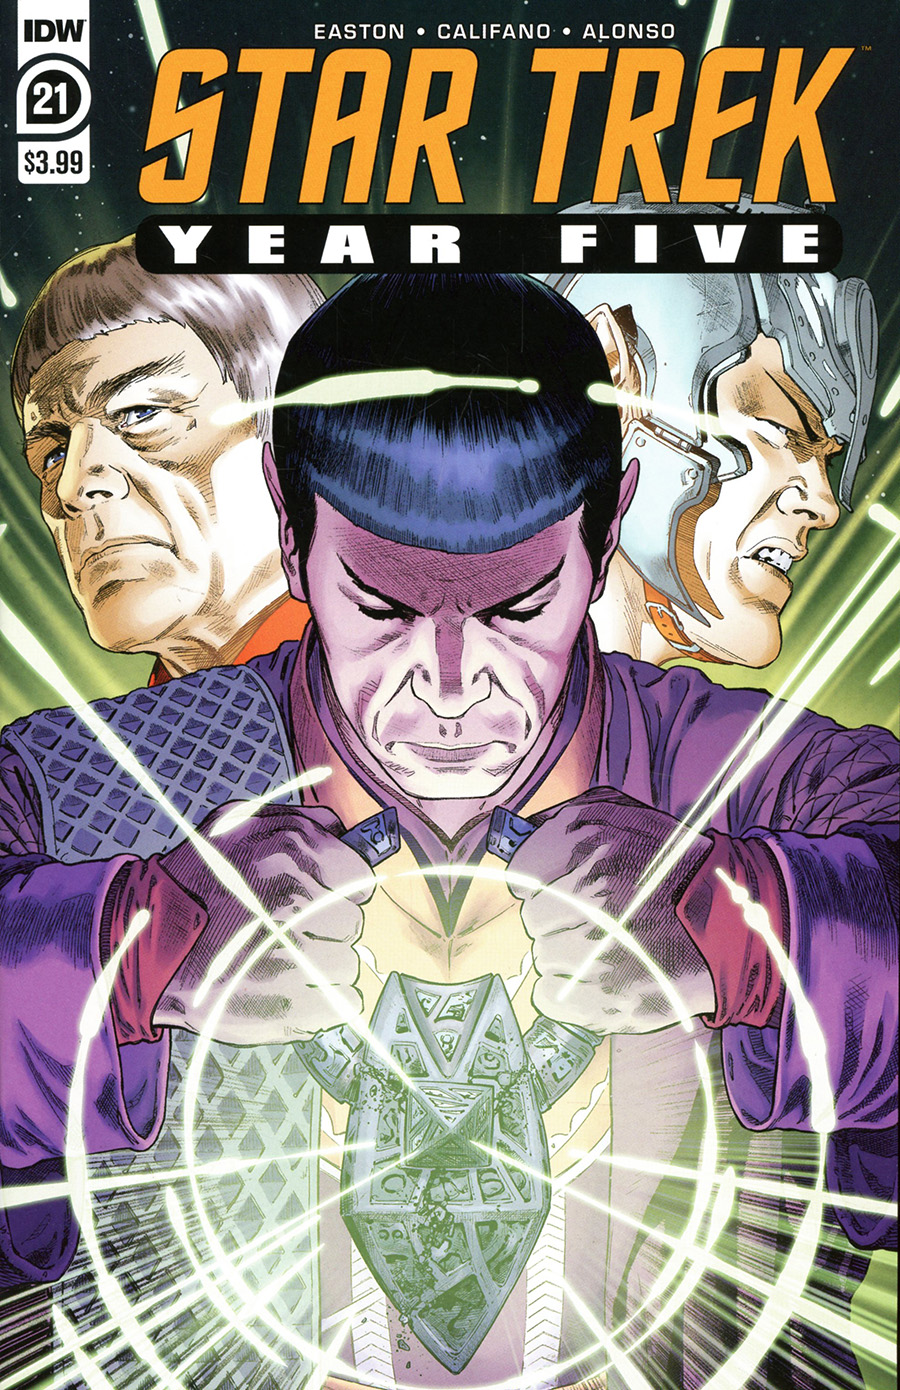 Star Trek Year Five #21 Cover A Regular Stephen Thompson Cover